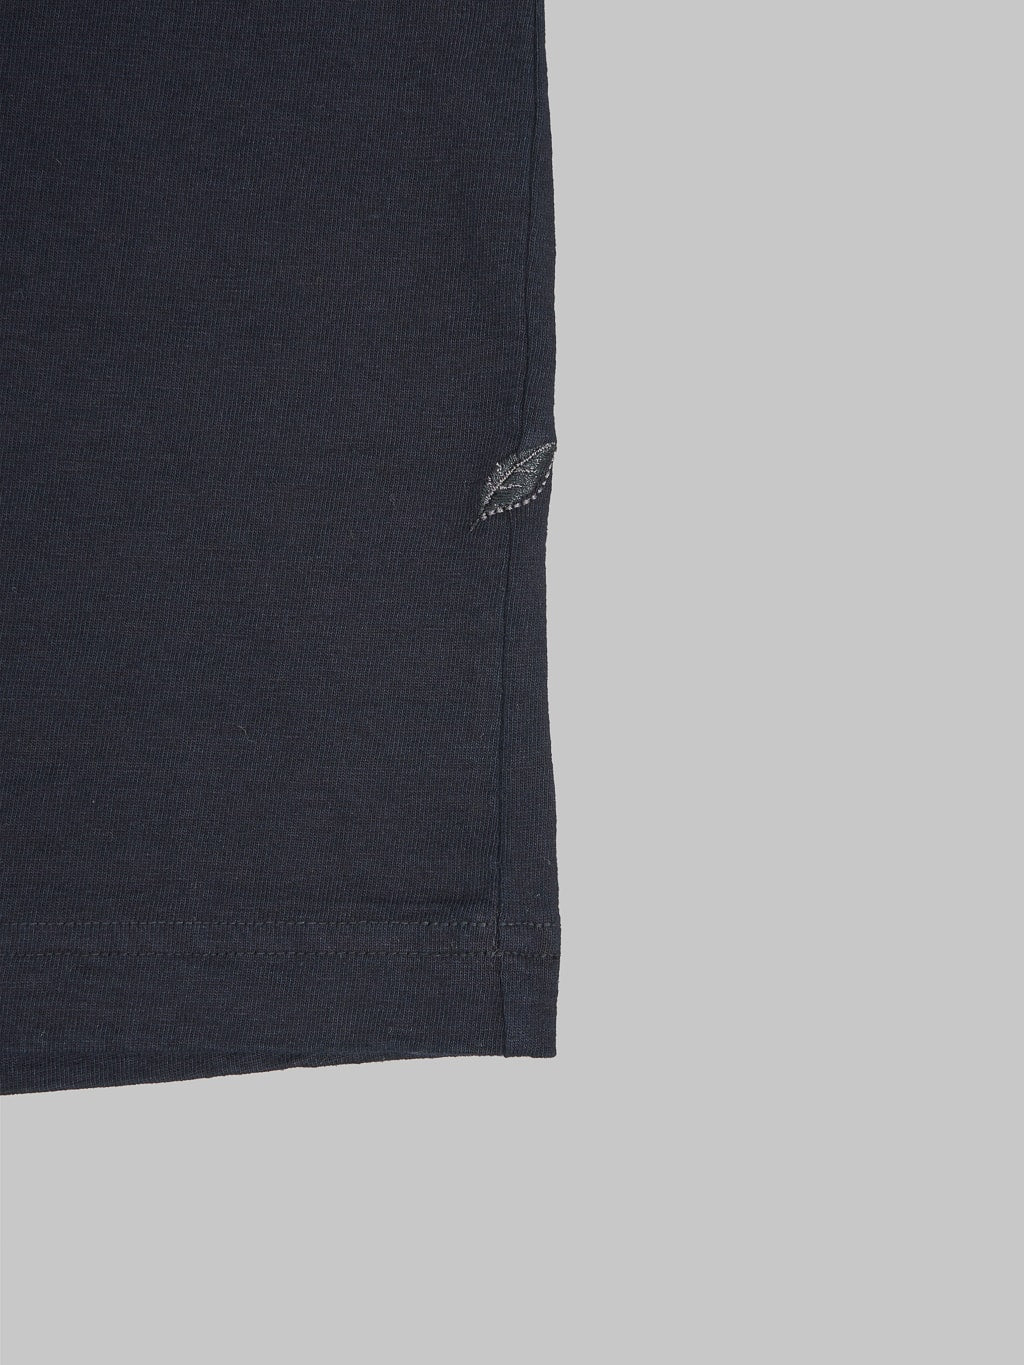 Pure Blue Japan LS5011-IDBK Black Indigo Dyed Long Sleeve T-Shirt